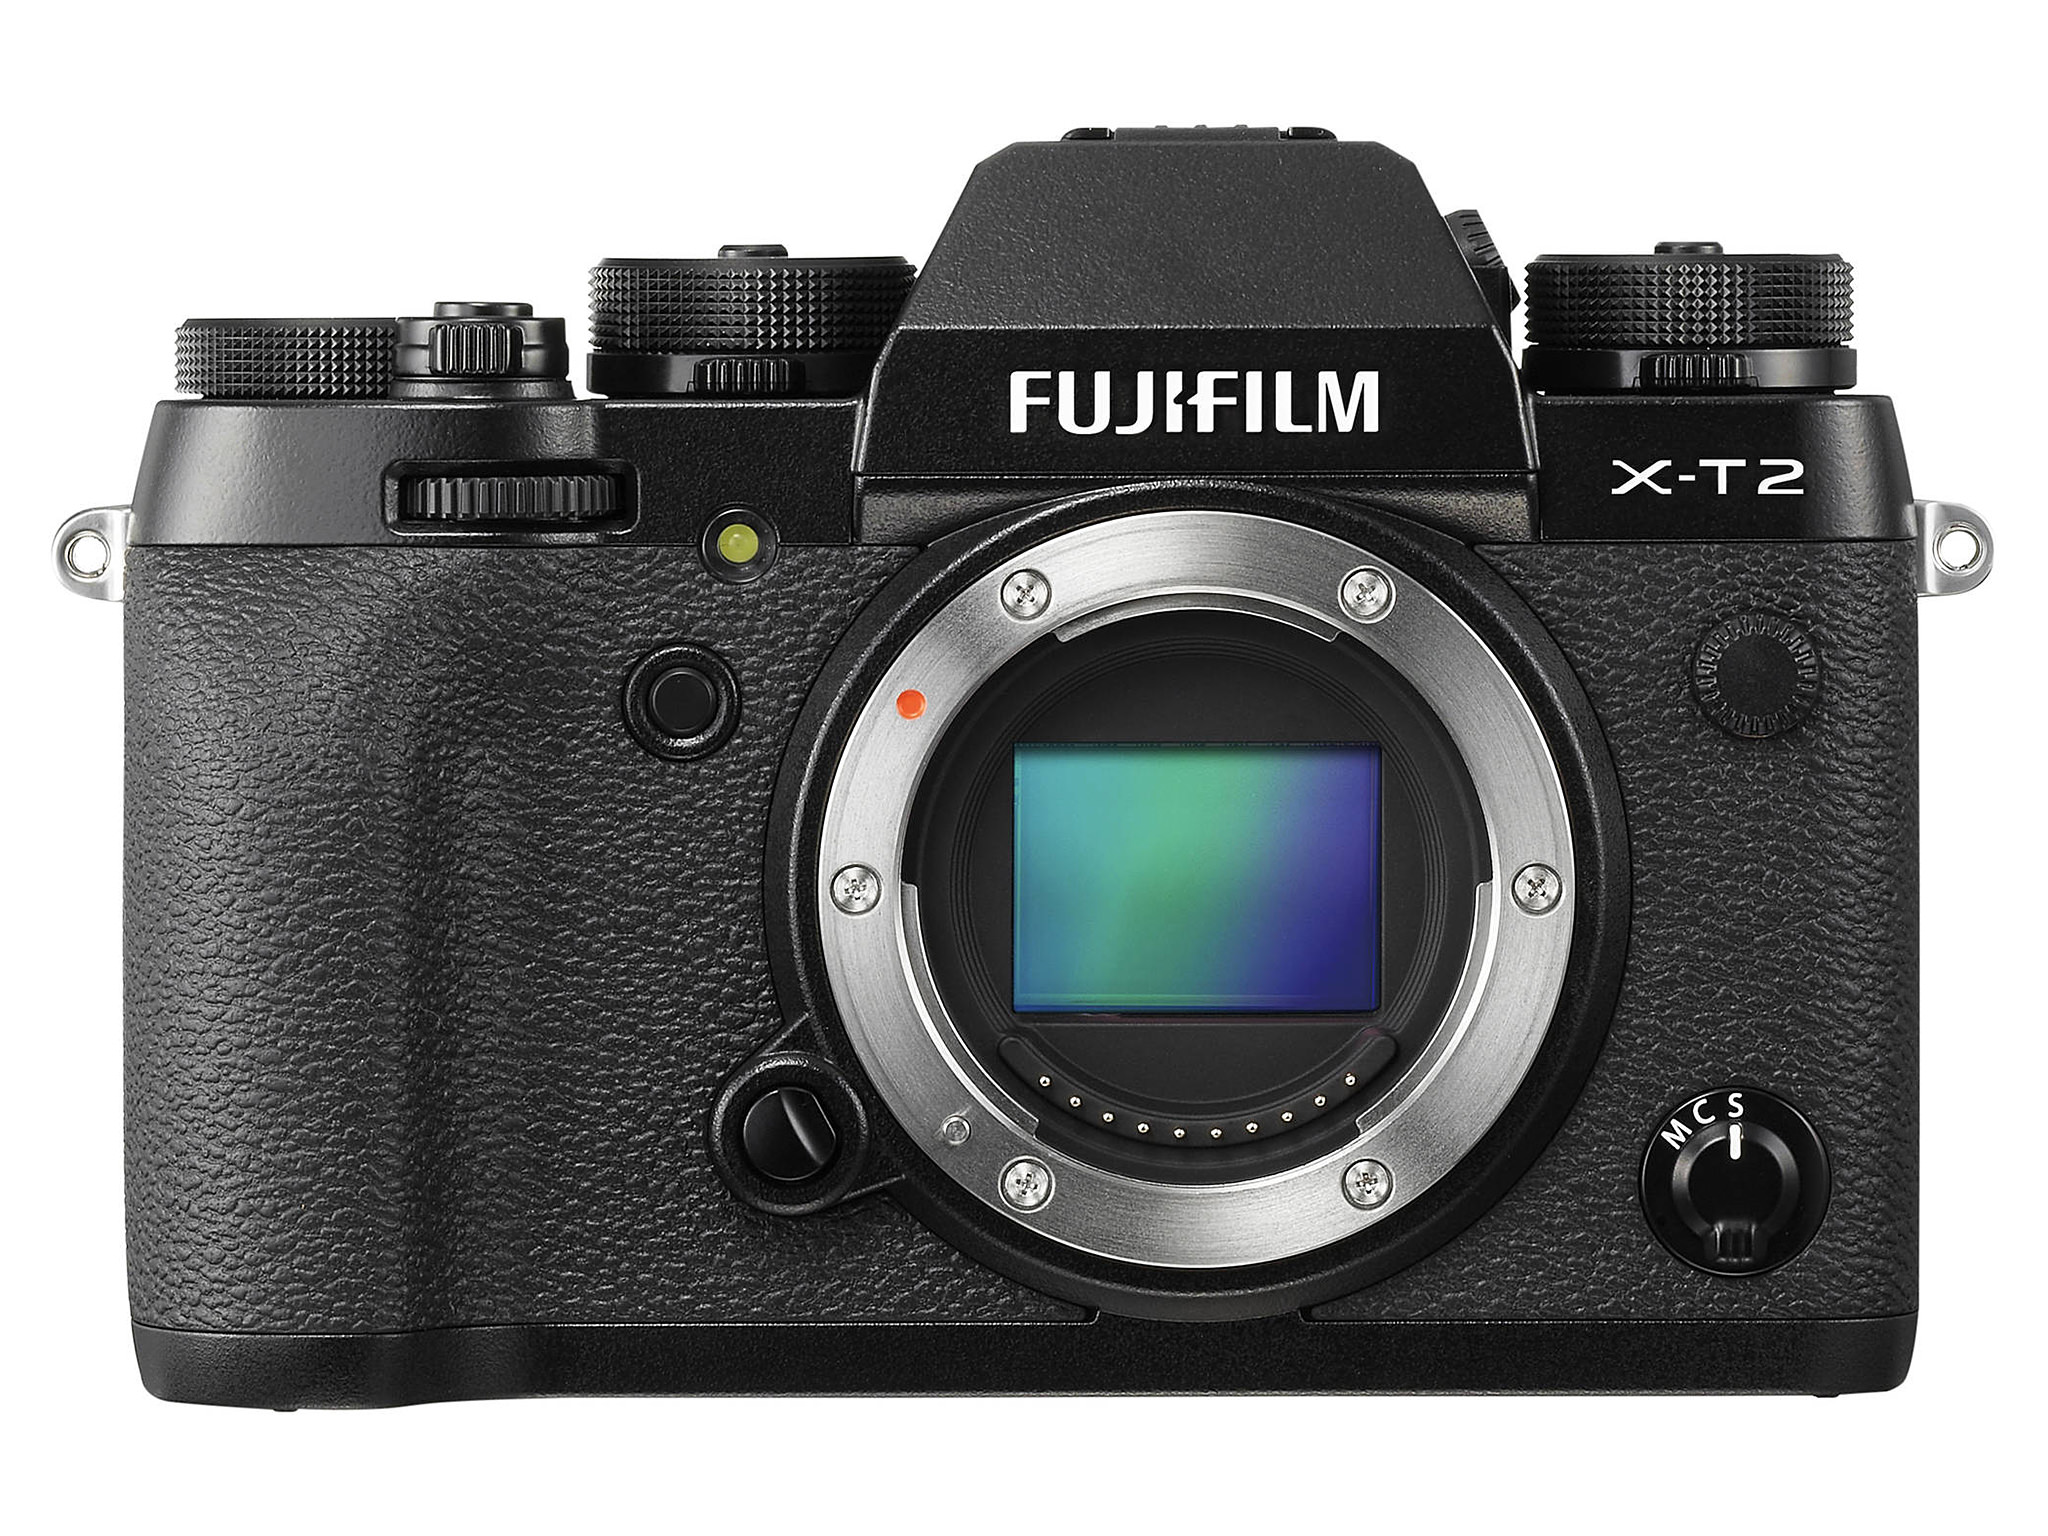 Mededogen minstens herfst Fuji X-T2 Review - Image Sensor, Metering, Lenses and Video